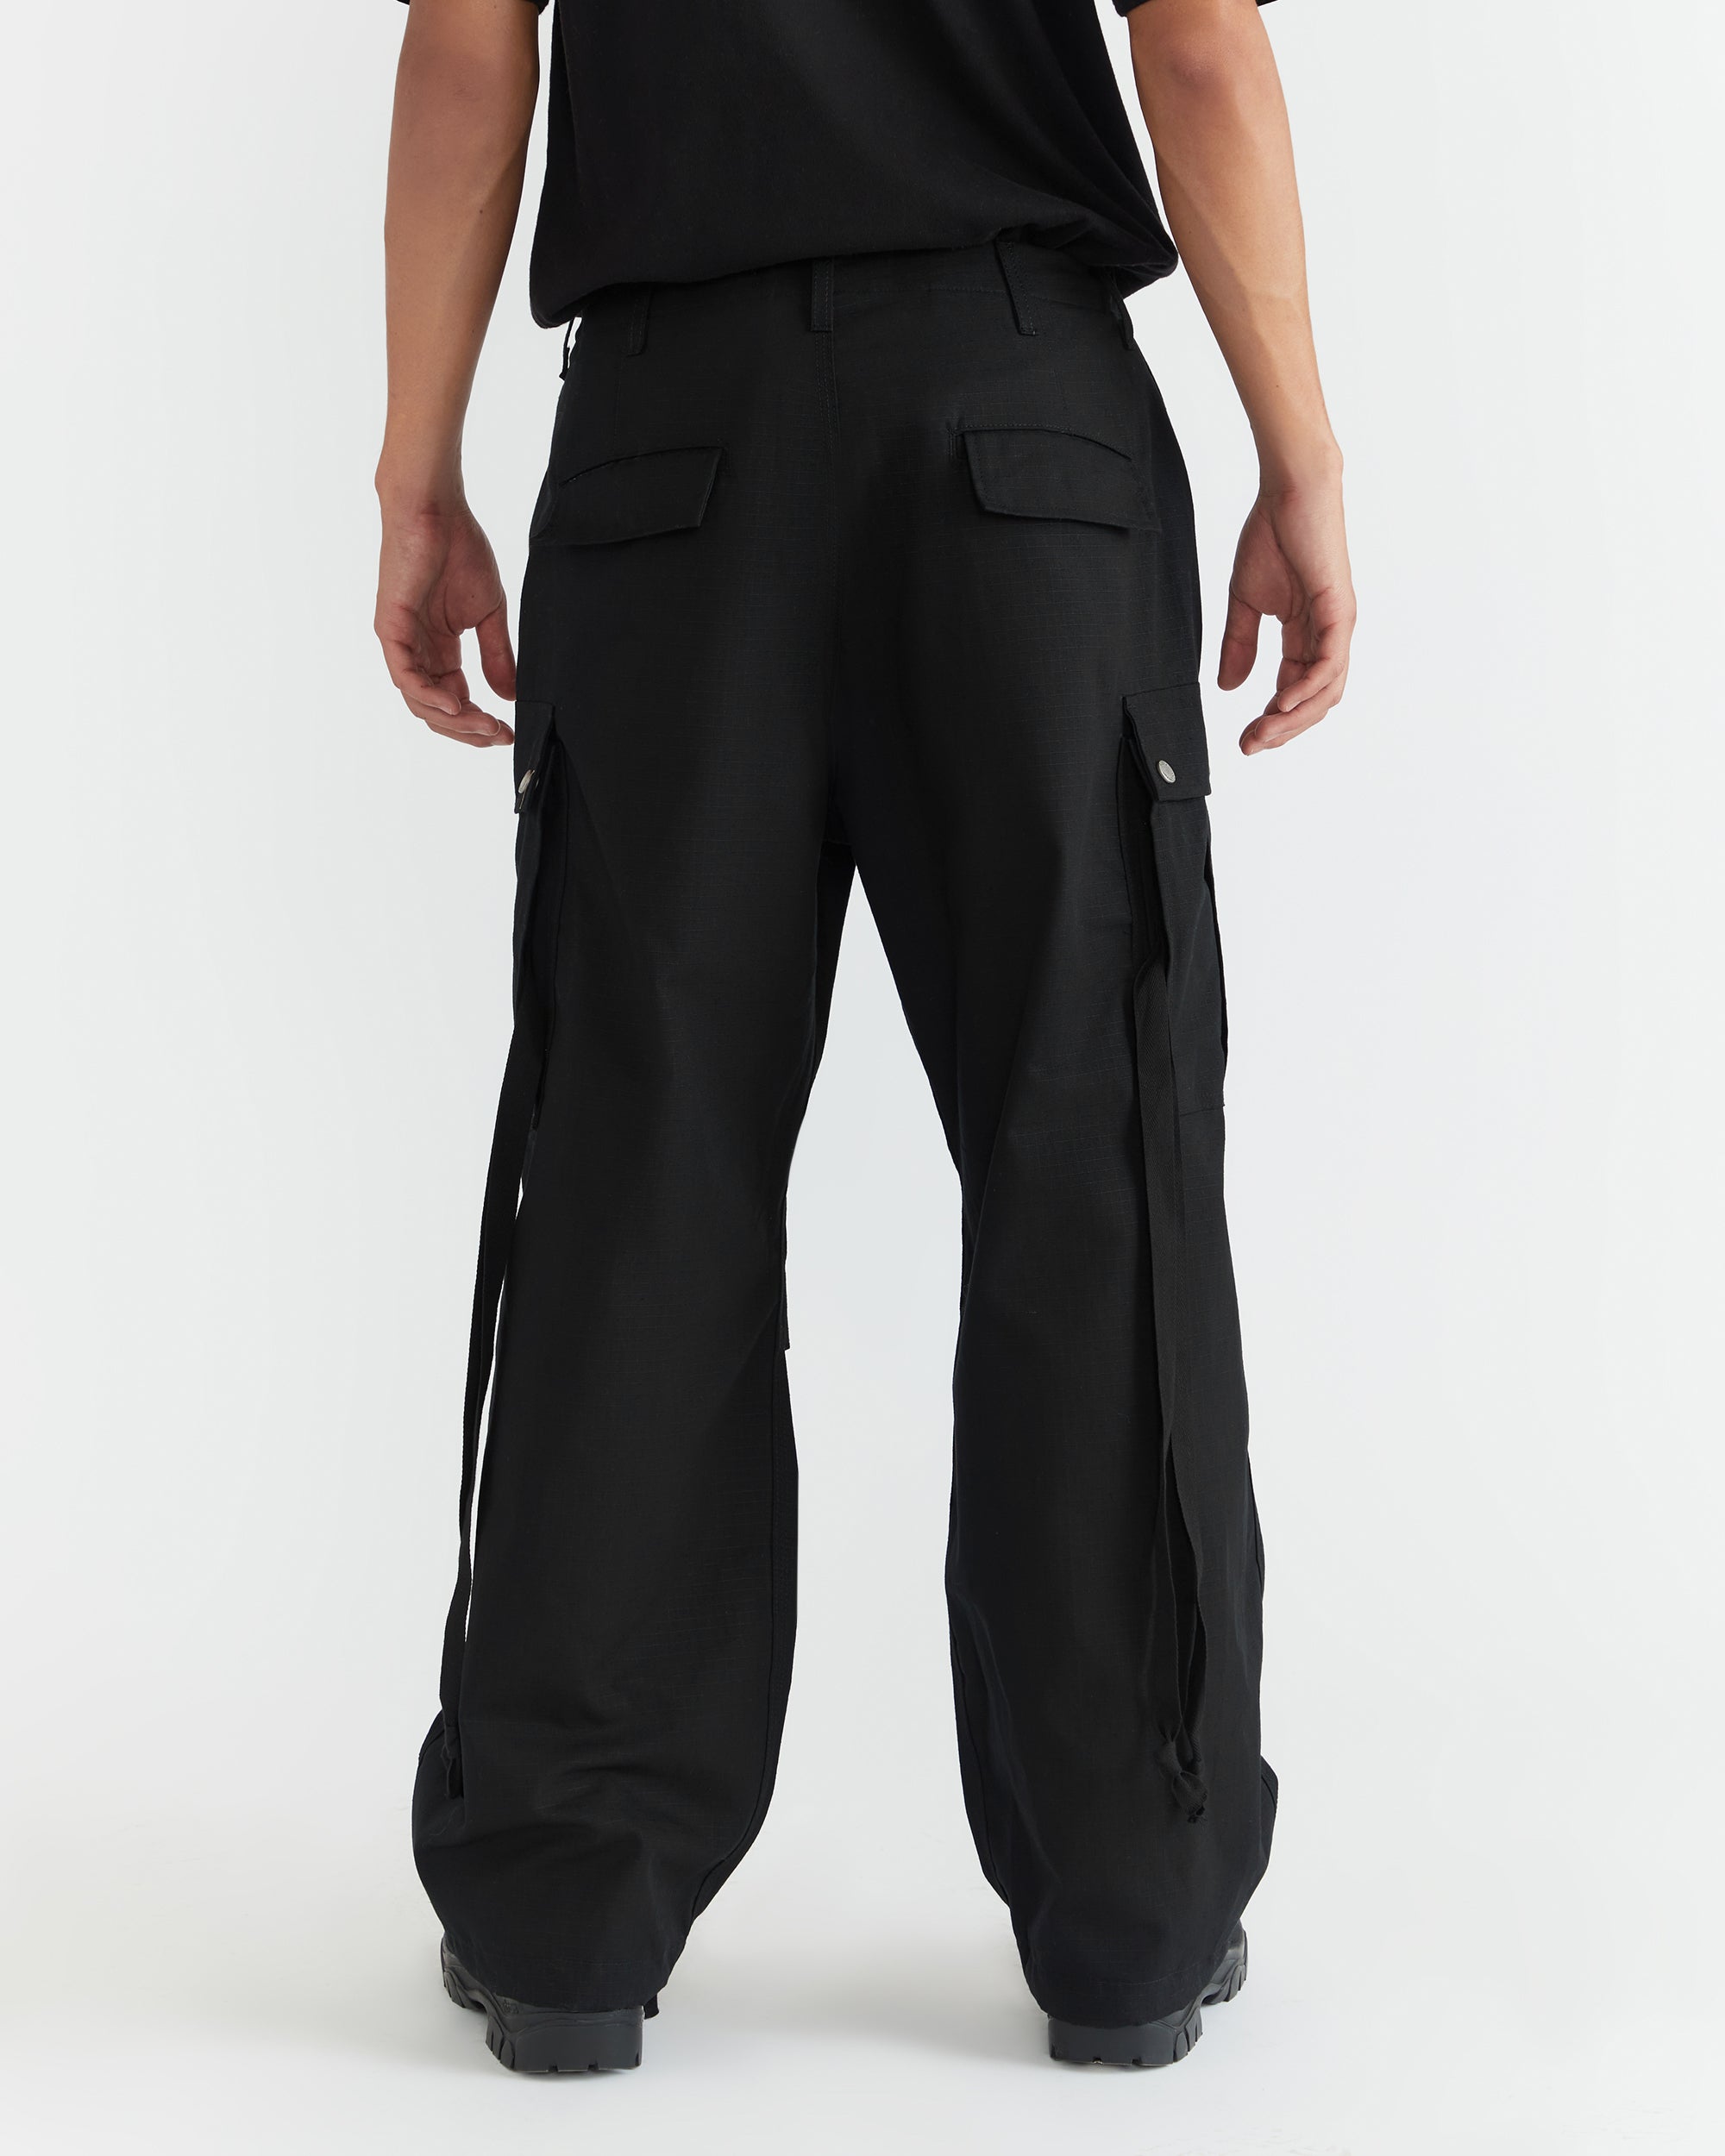 Black Cotton Lycra Rib Knit Wide Leg Pant, 4 Pocket Cargo, Solid